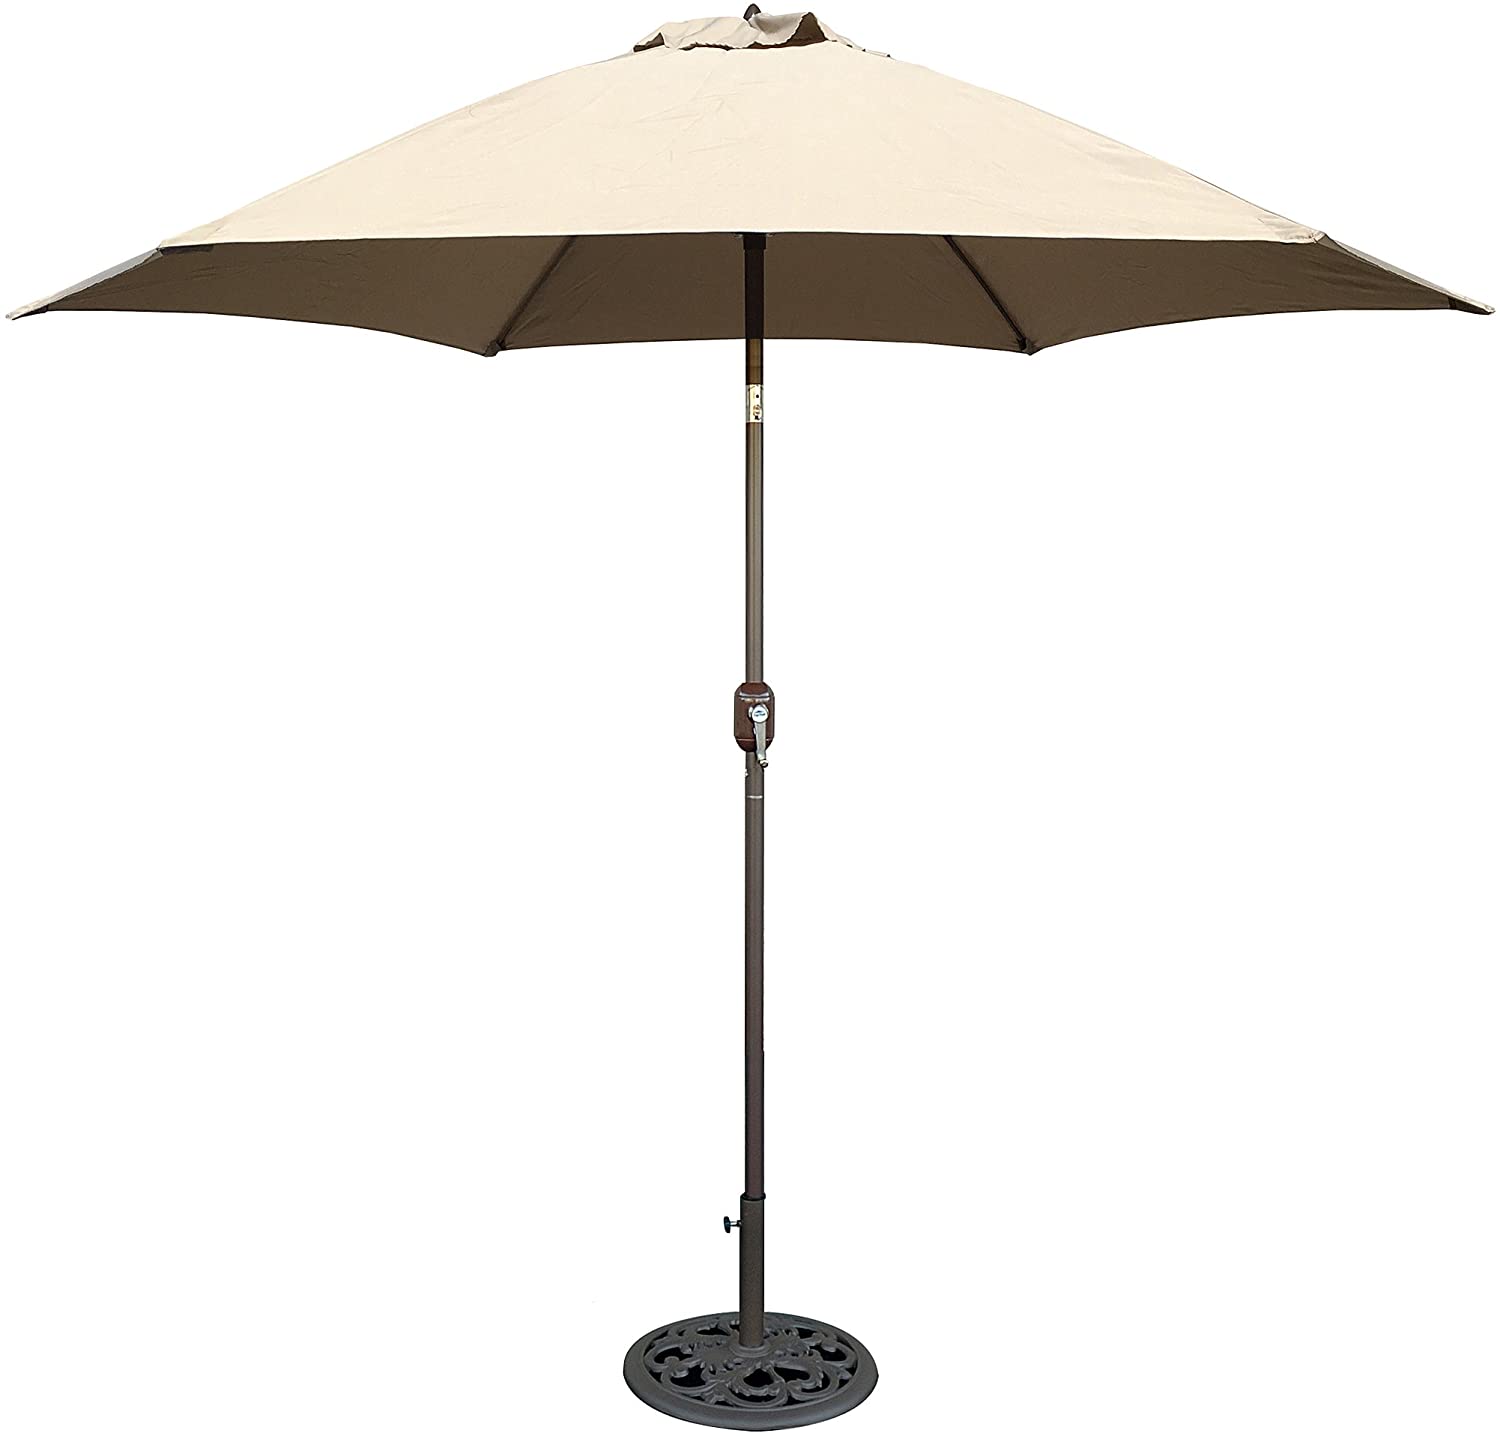 Tropishade Dura-Tilt Outdoor Patio Umbrella, 9-Foot